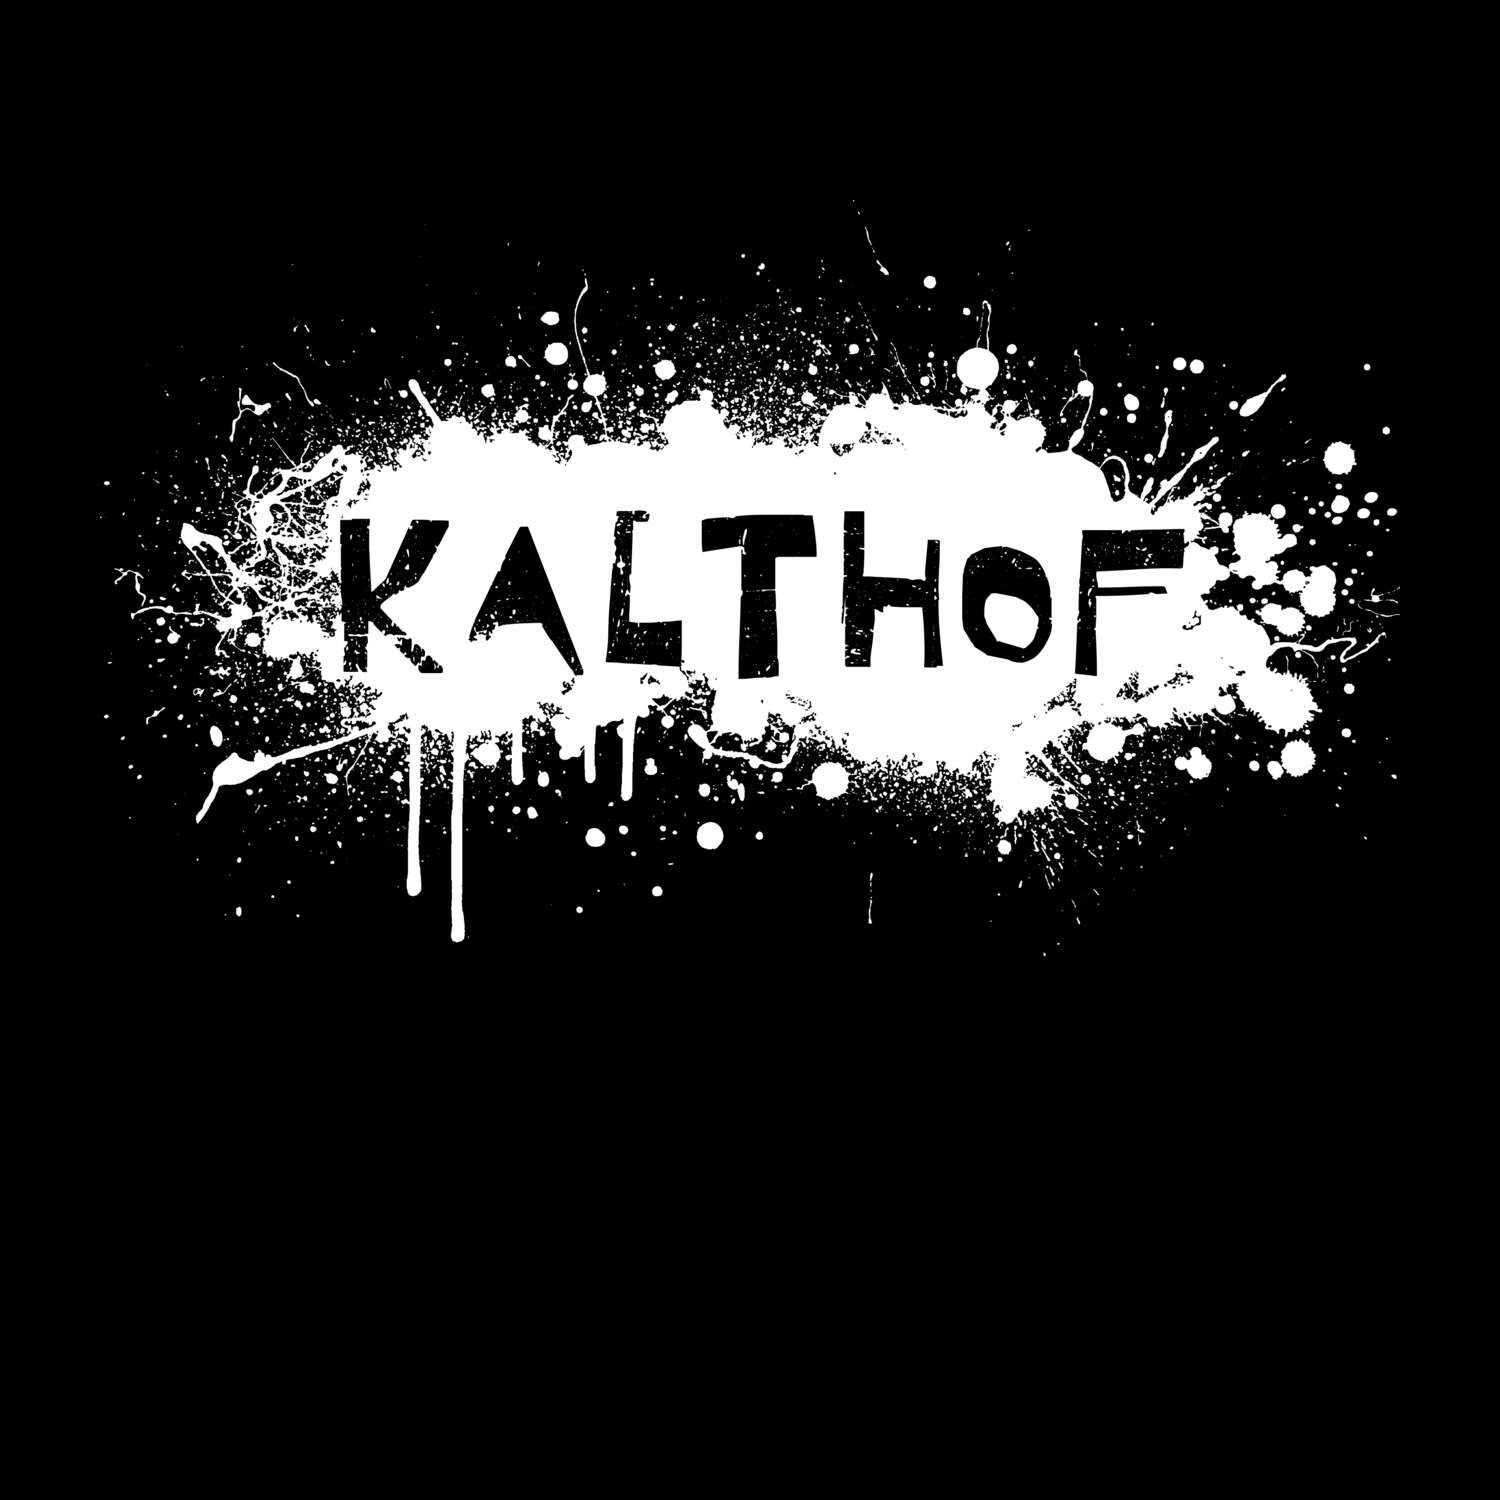 Kalthof T-Shirt »Paint Splash Punk«